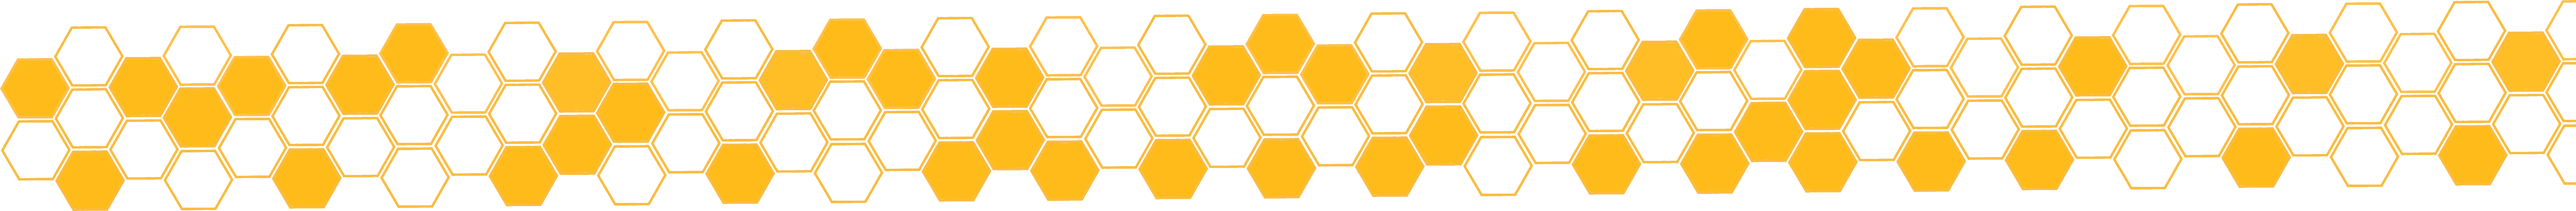 long yellow honeycomb